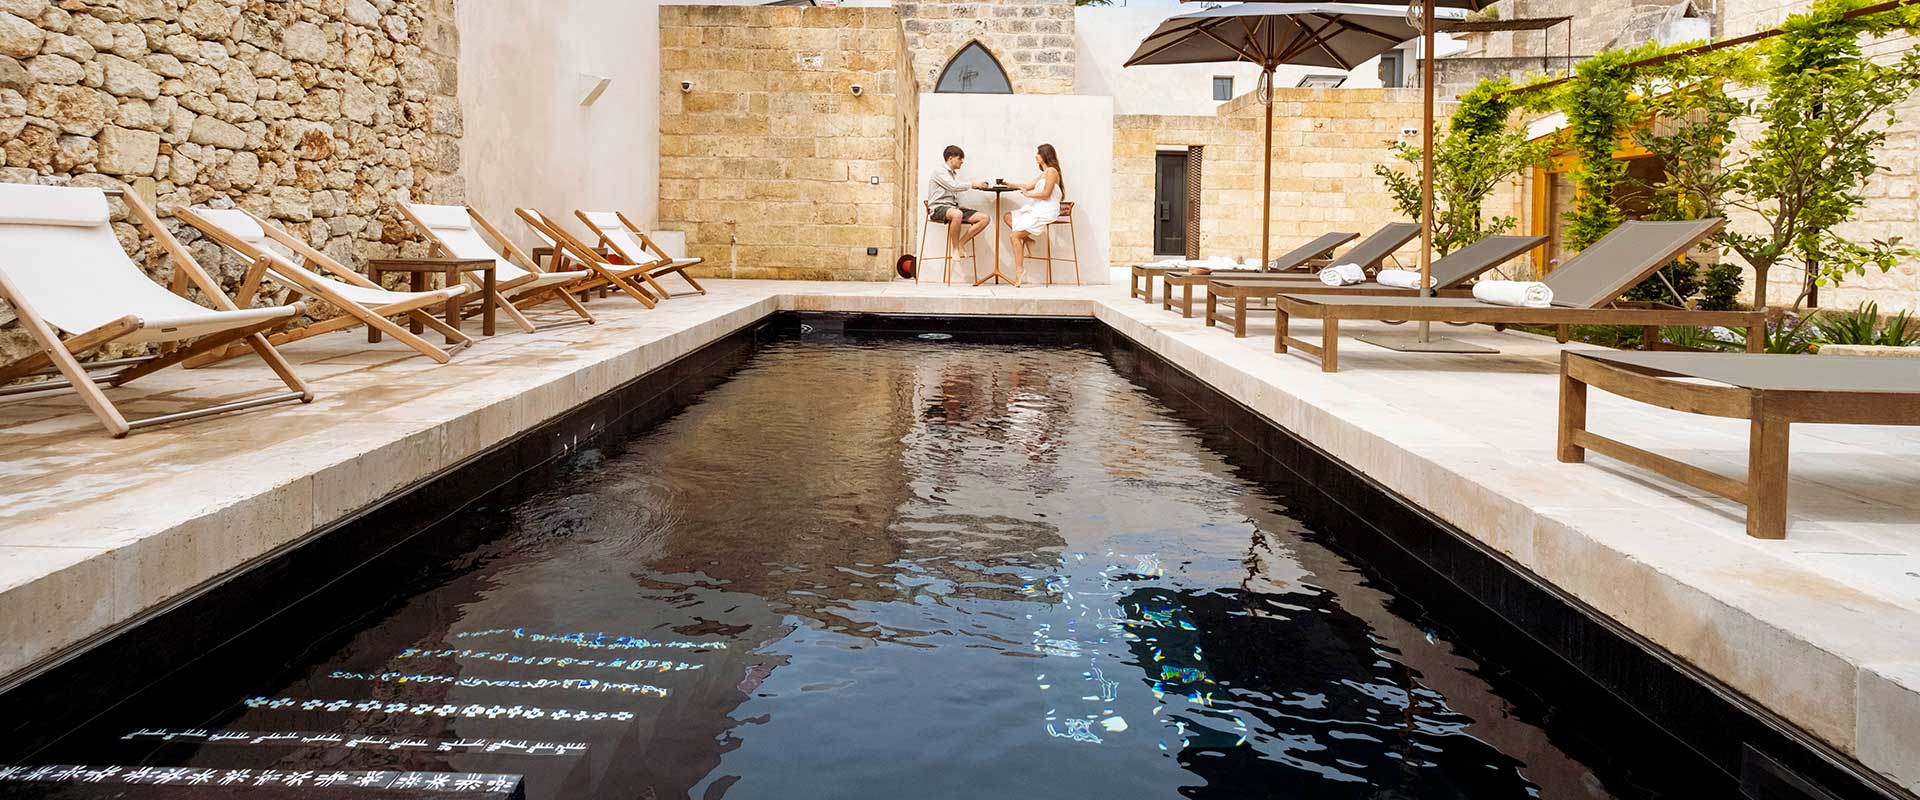 salento piscina vacanze masseria spongano camere albergo hotel b&b ospitalità dimora i tre bacili itrebacili